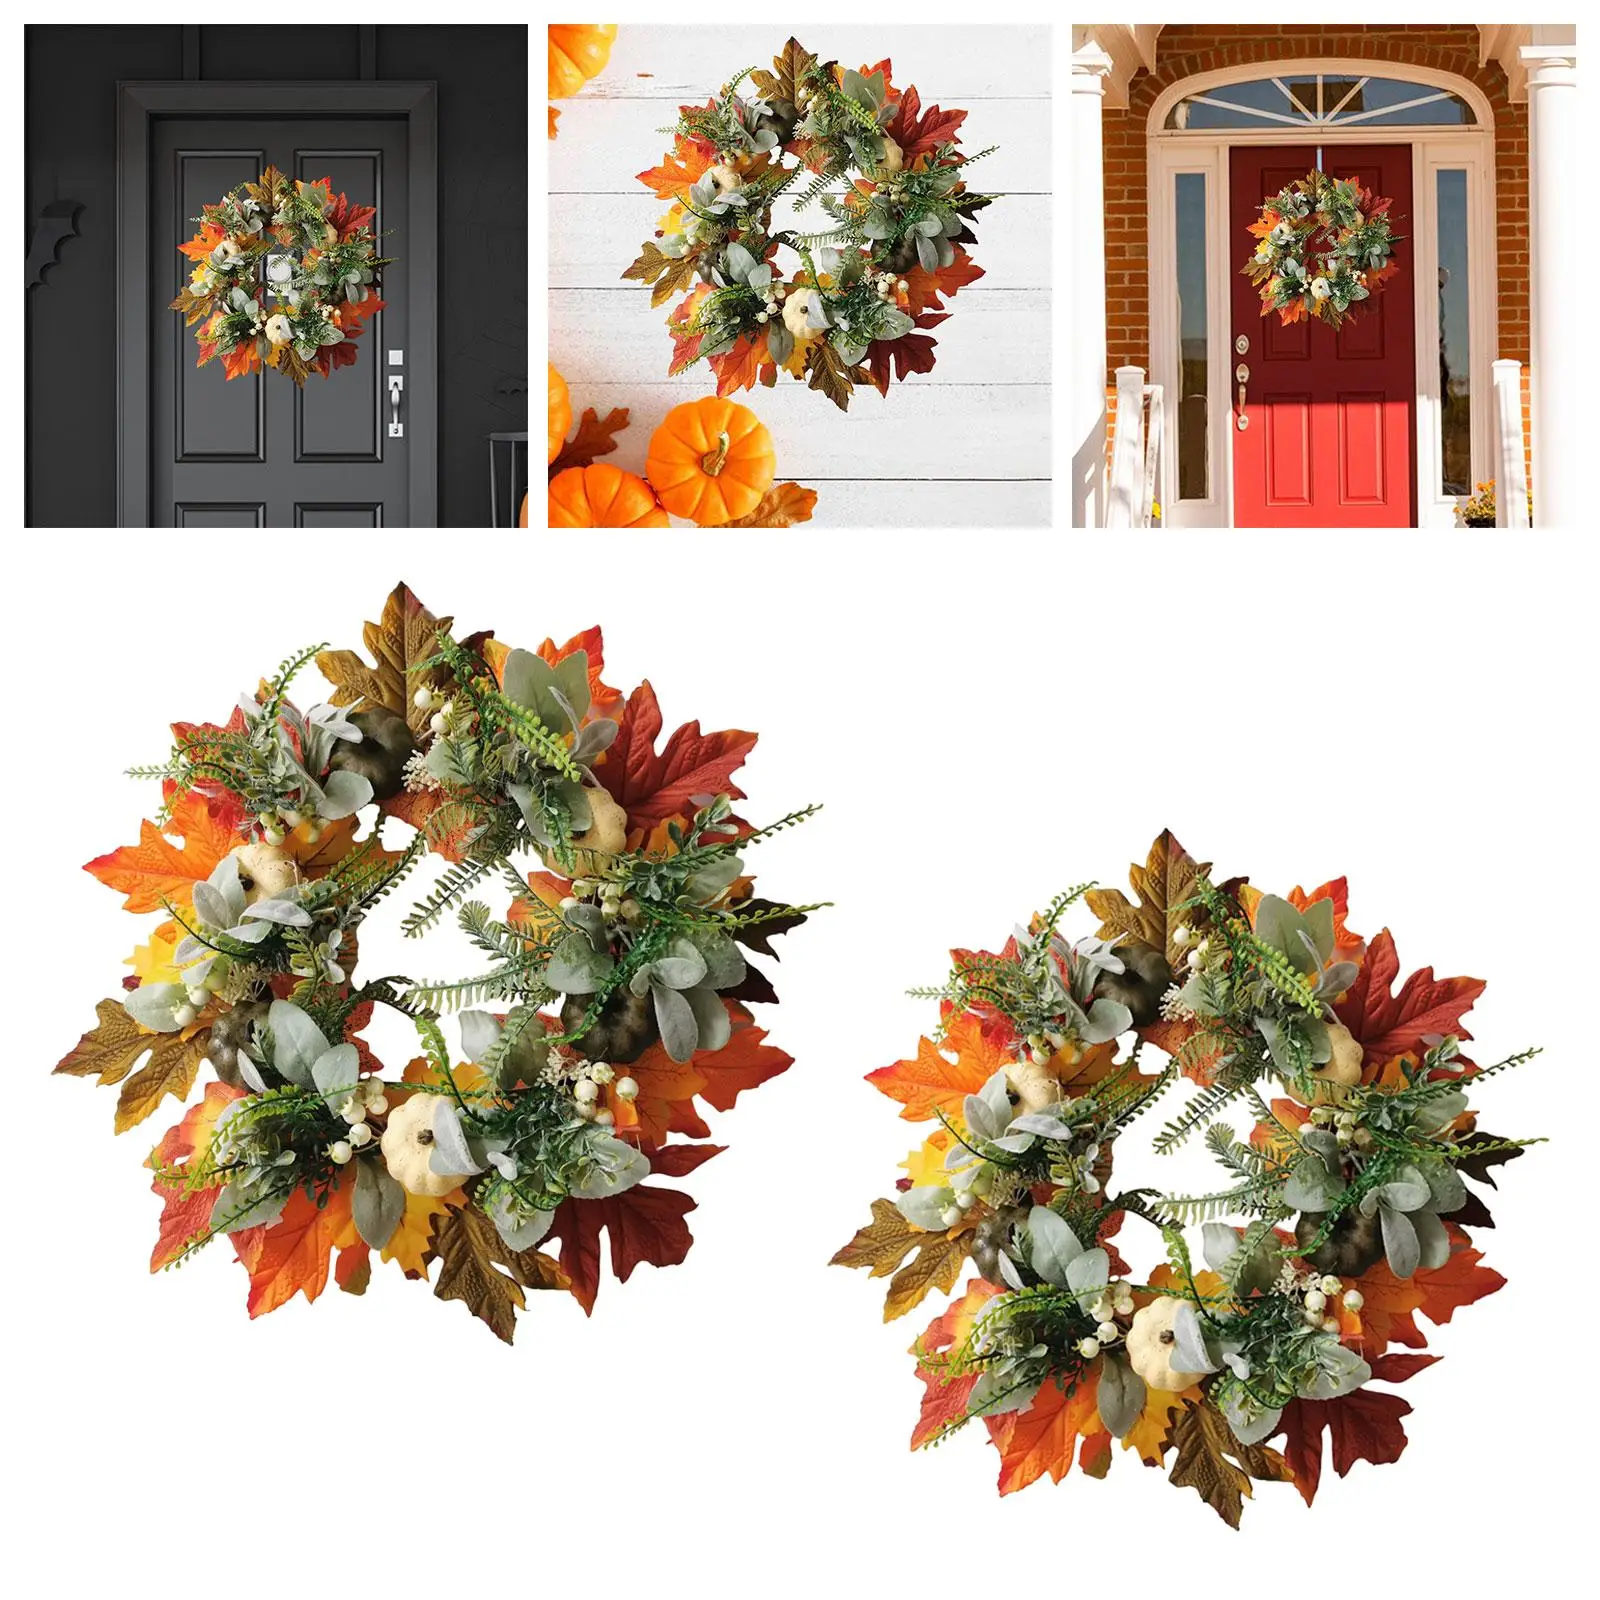 Pumpkin Fall Door Wreath Harvest Door Wreath Autumn Farmhouse Wreath Fall Wreaths for Wedding Halloween Wall Outdoor Decor